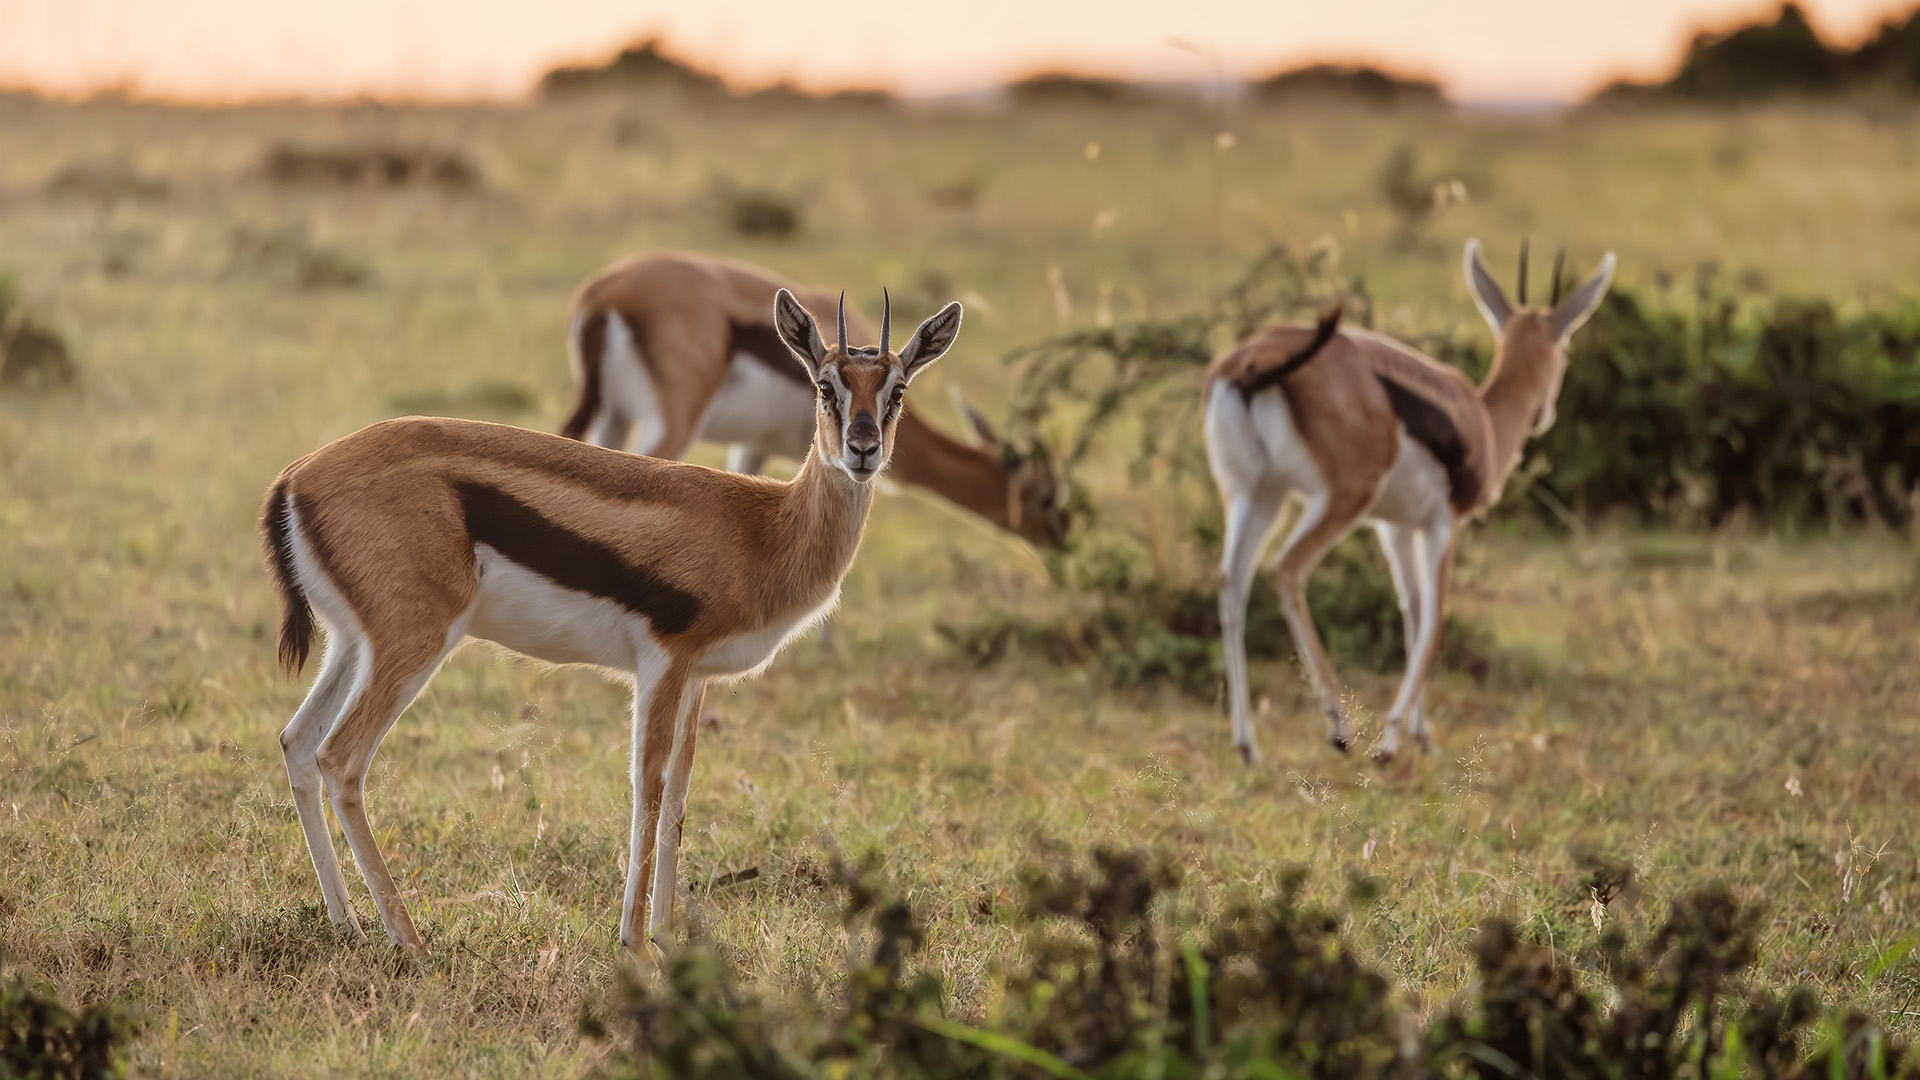 three gazelles on the savannah plains of the Masai Mara National Reserve